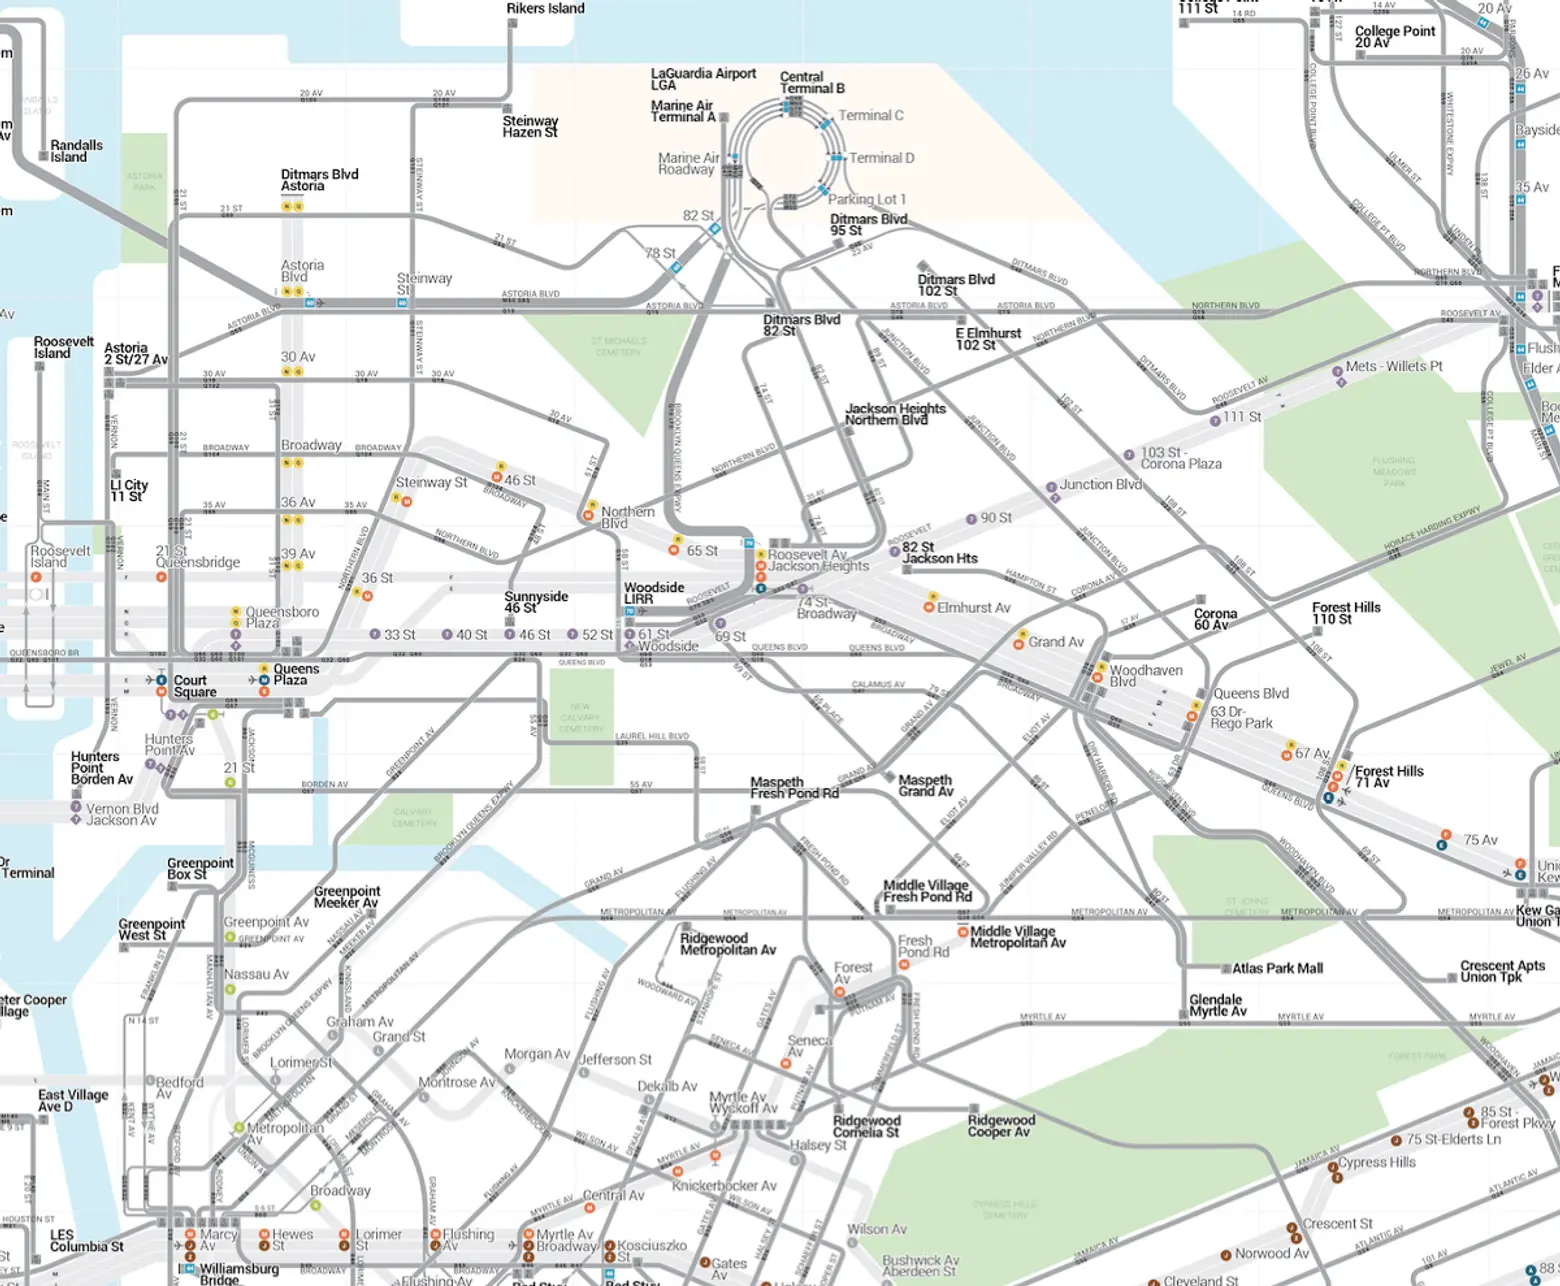 NYC Transit Map, NYC Transit, NYC Subway, MTA, Anthony Denaro, MetroCard, Subway Map, NYC bus, maps